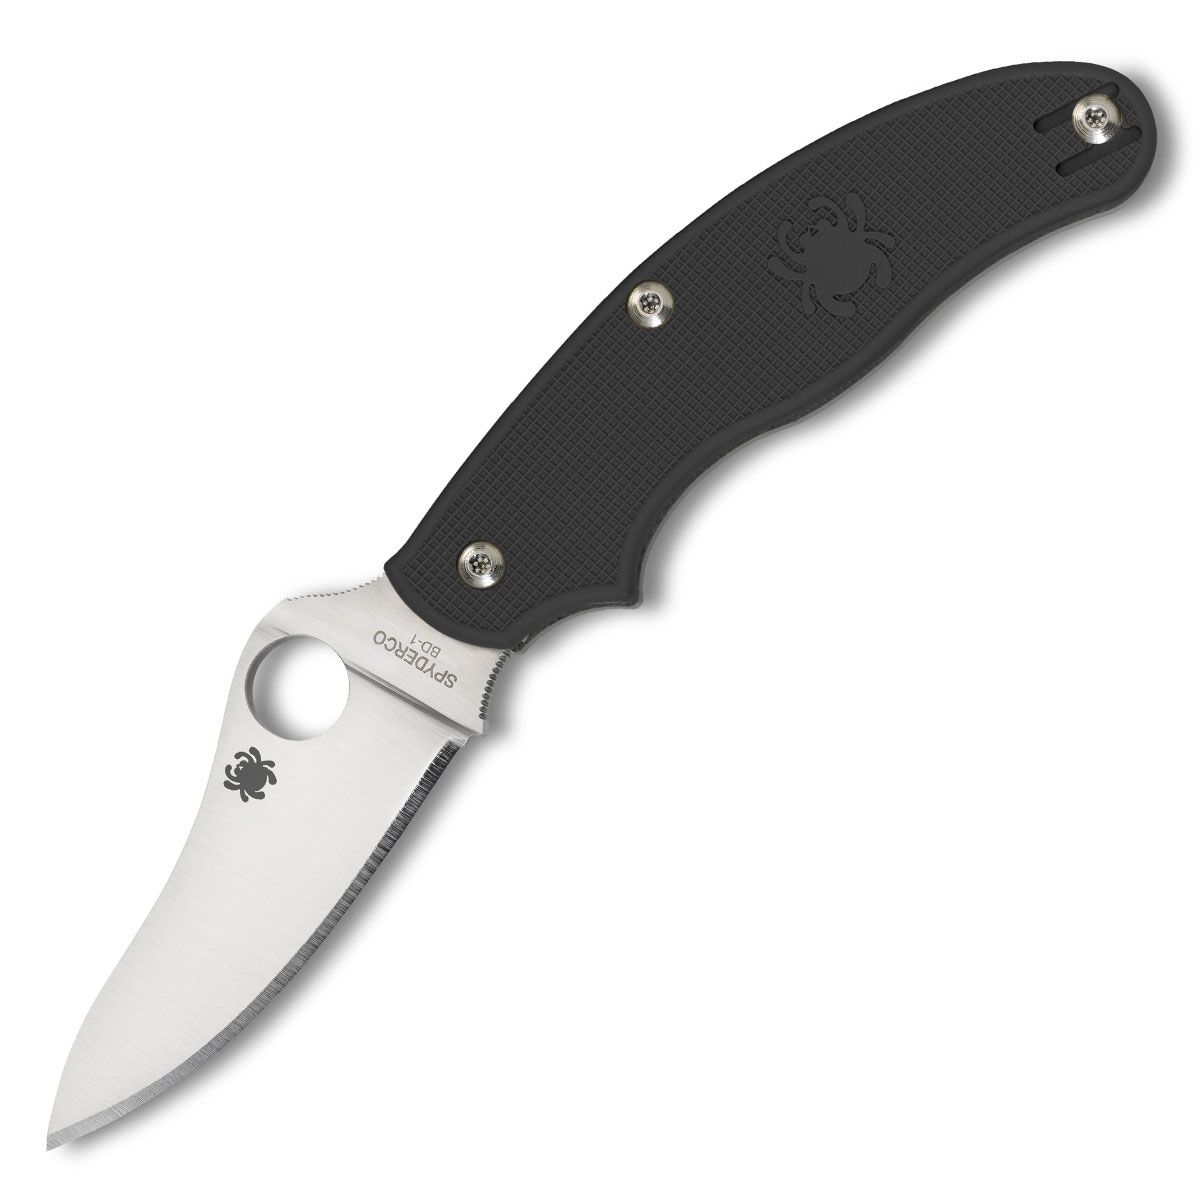 Spyderco UKPK Droppoint UK Penknife